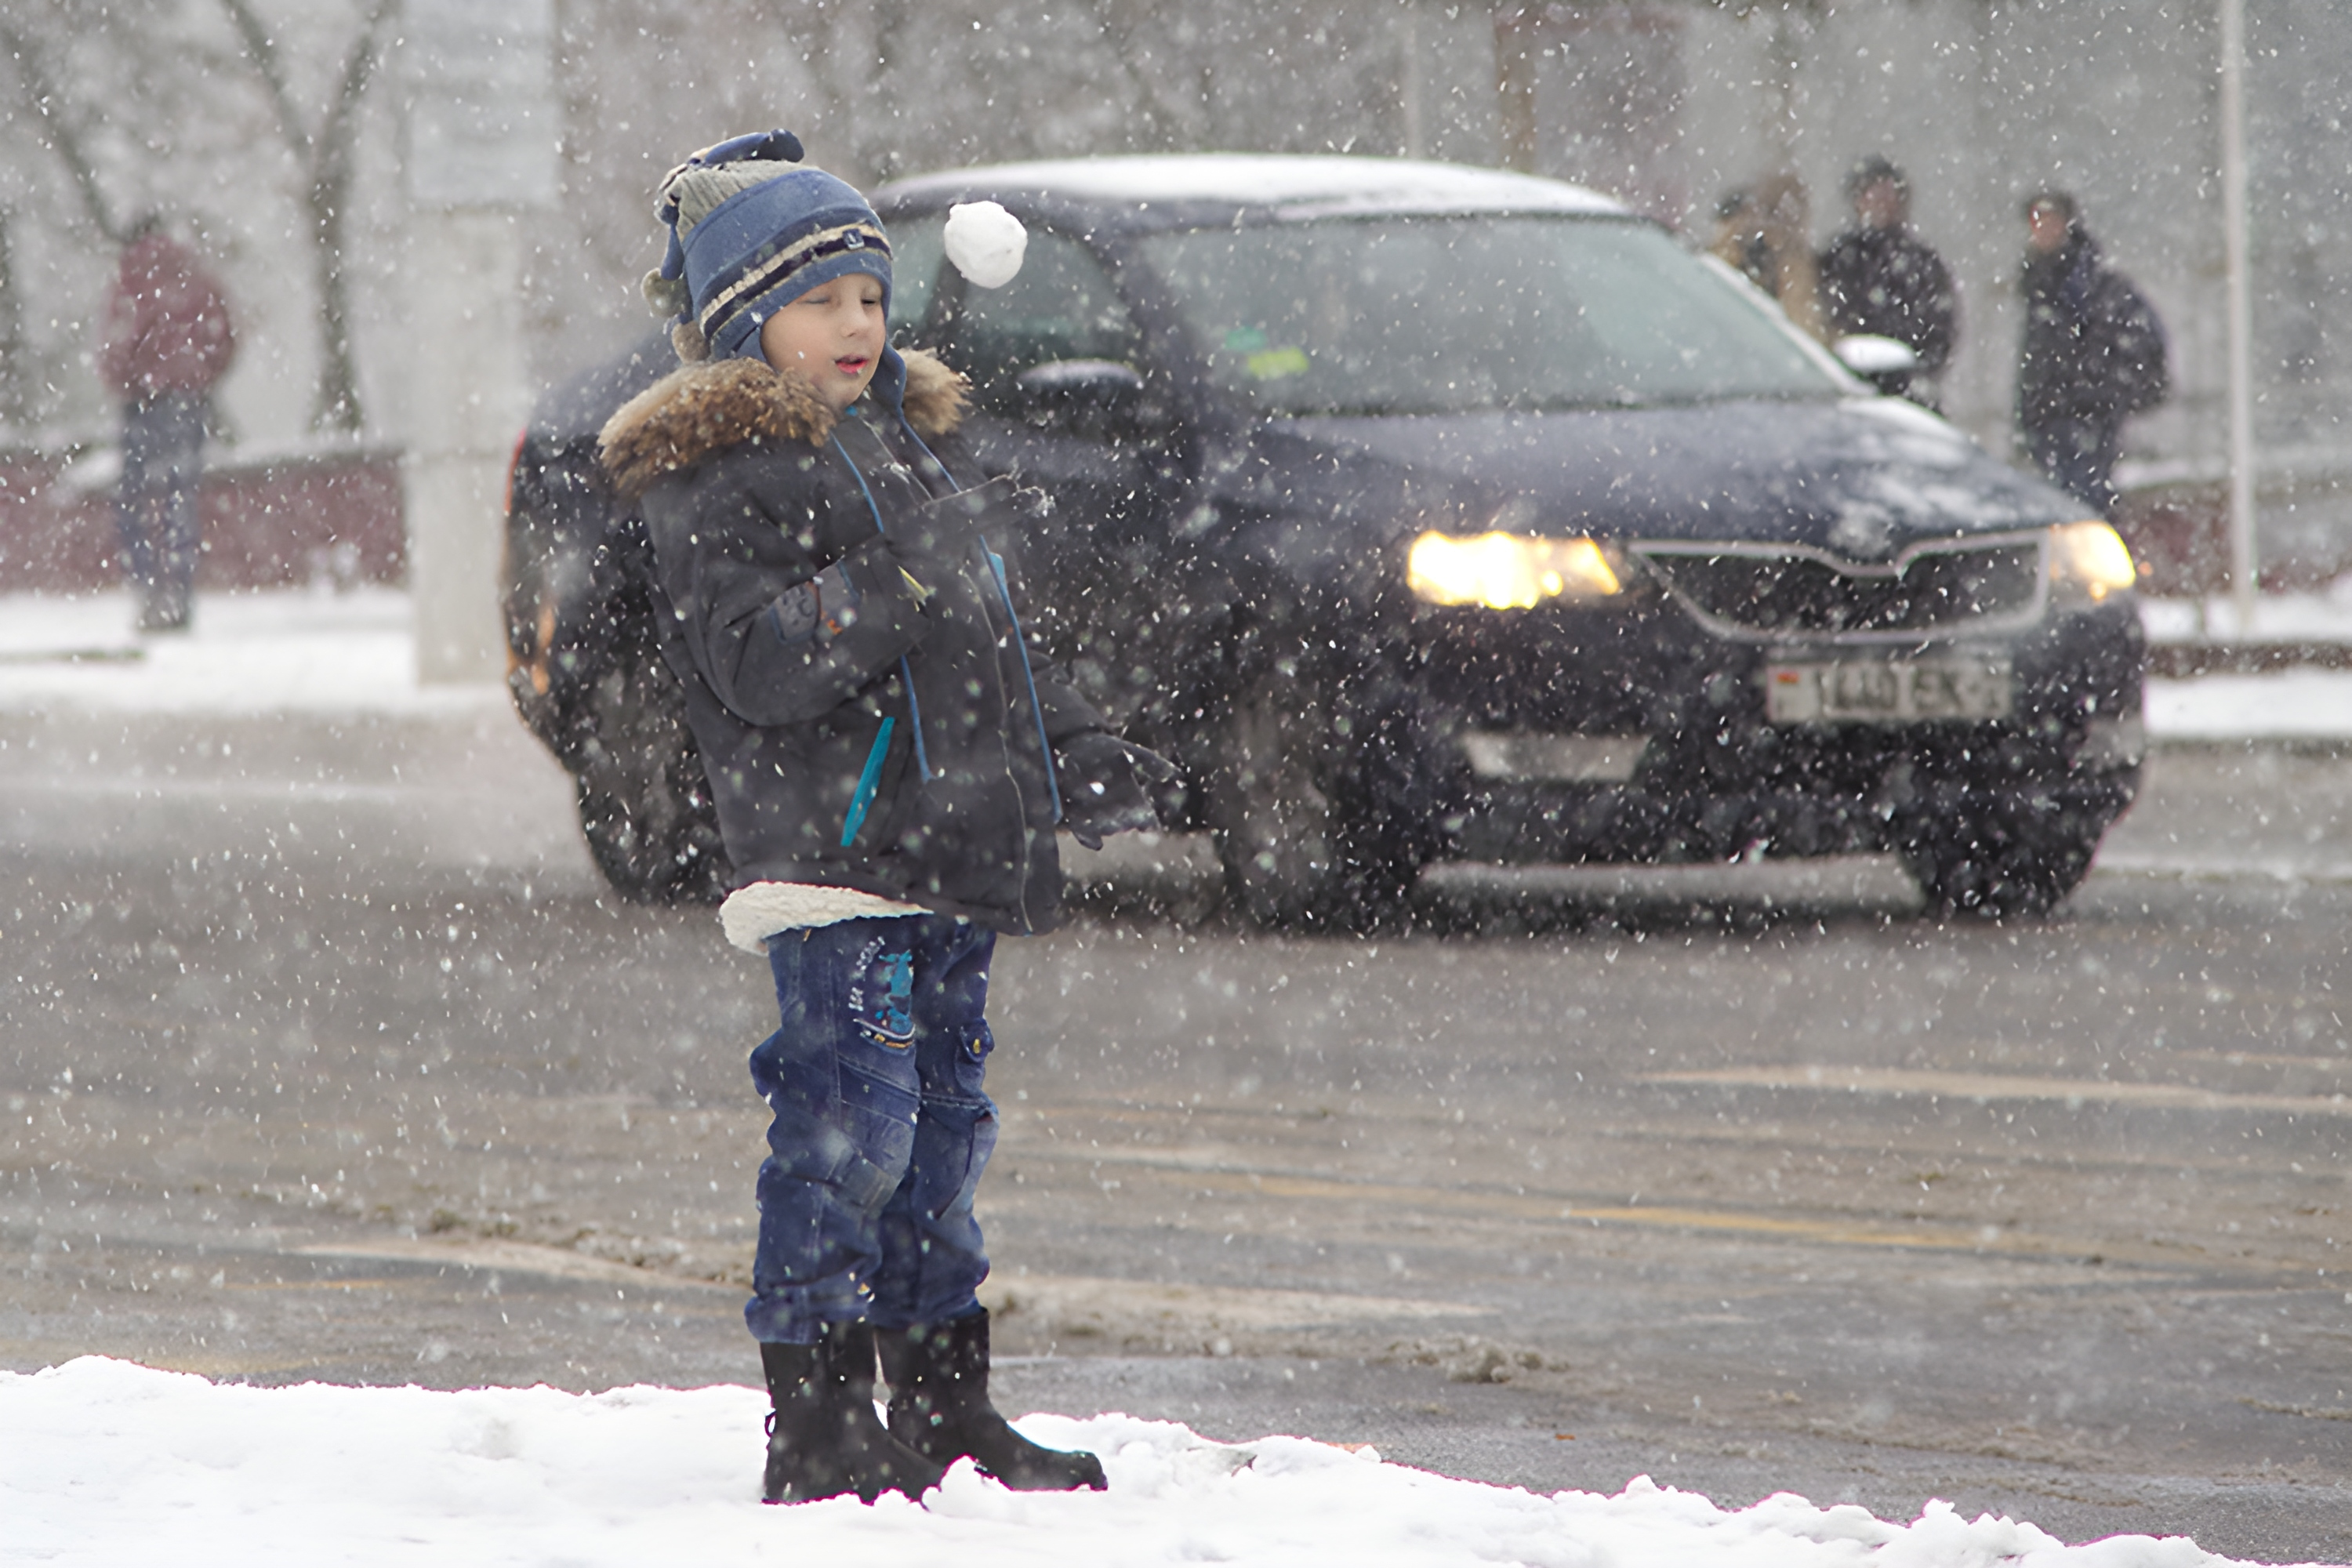 15 градусов мороза и 16 сантиметров снега — в Витебске установилась настоящая зимняя погода